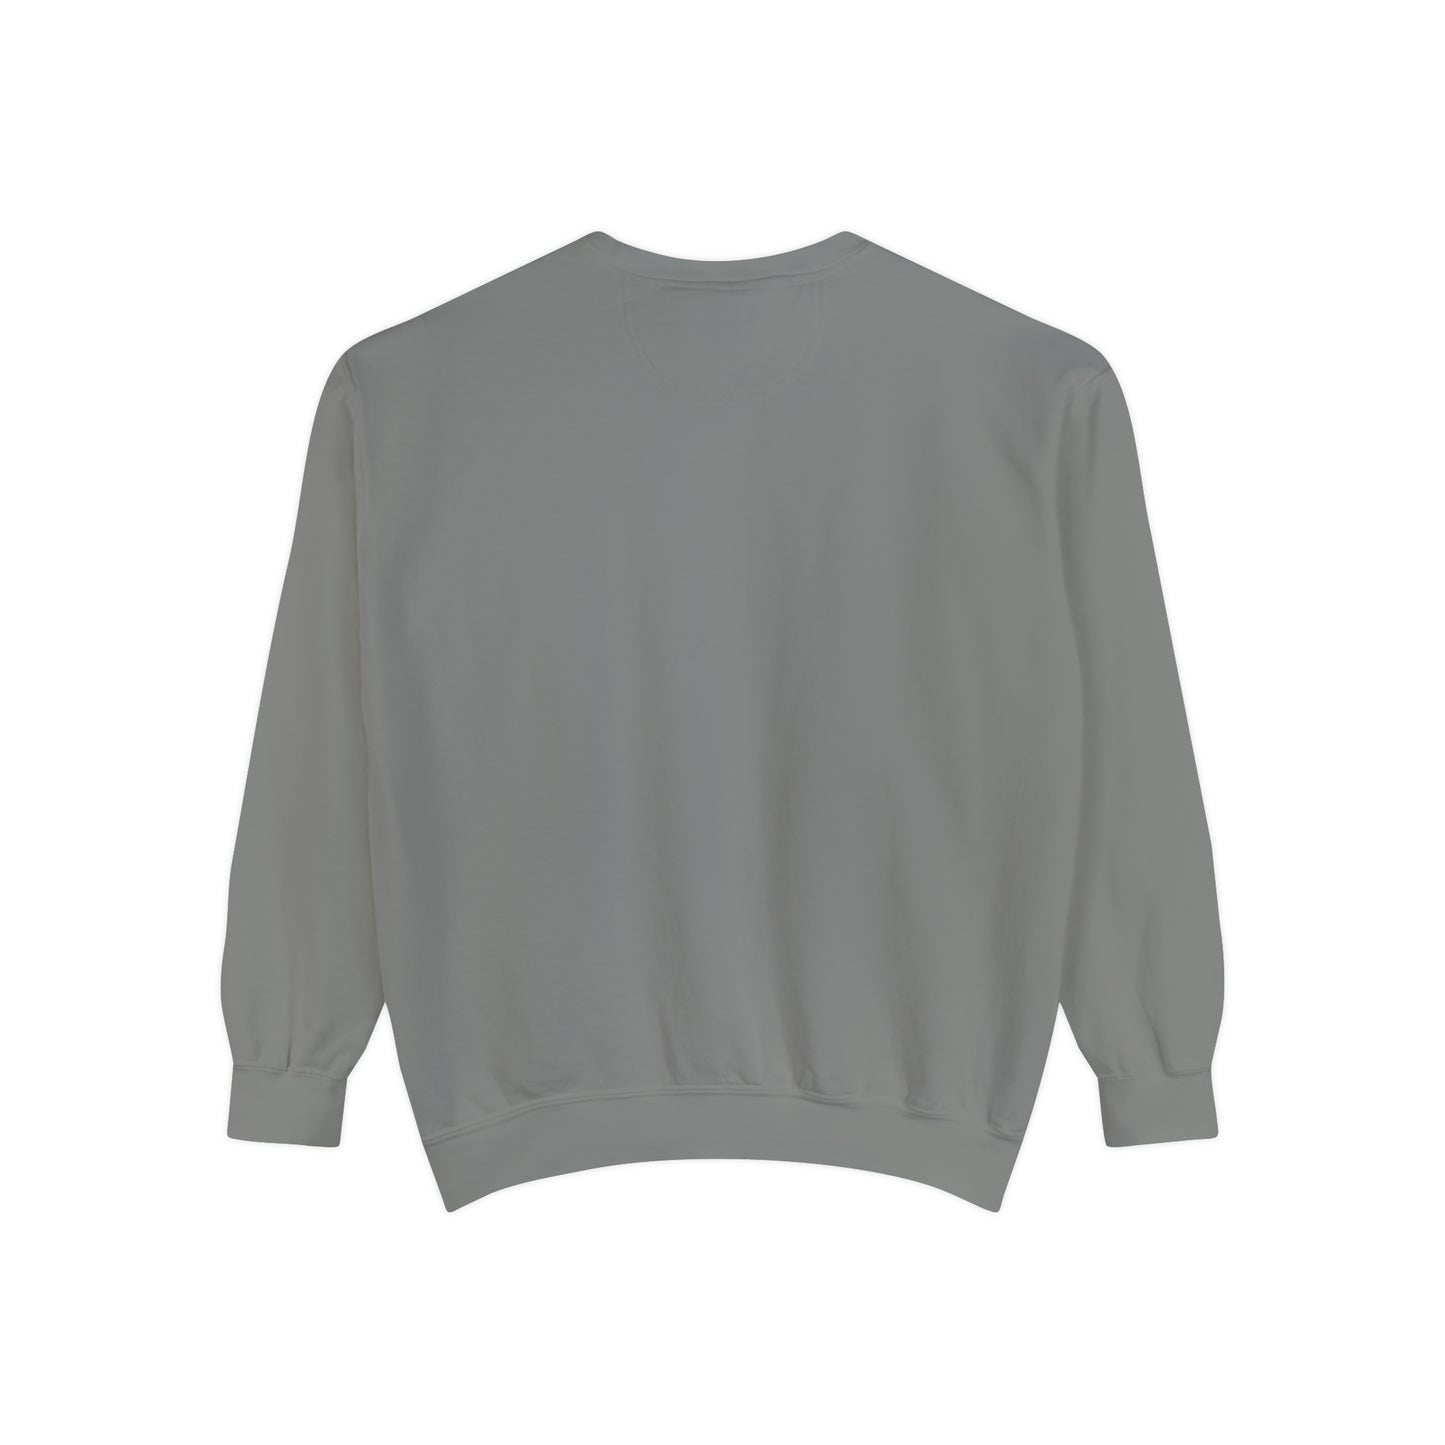 Unisex Long Sleeve Sweatshirt - AFFORD - AFFORDABLE MARKET